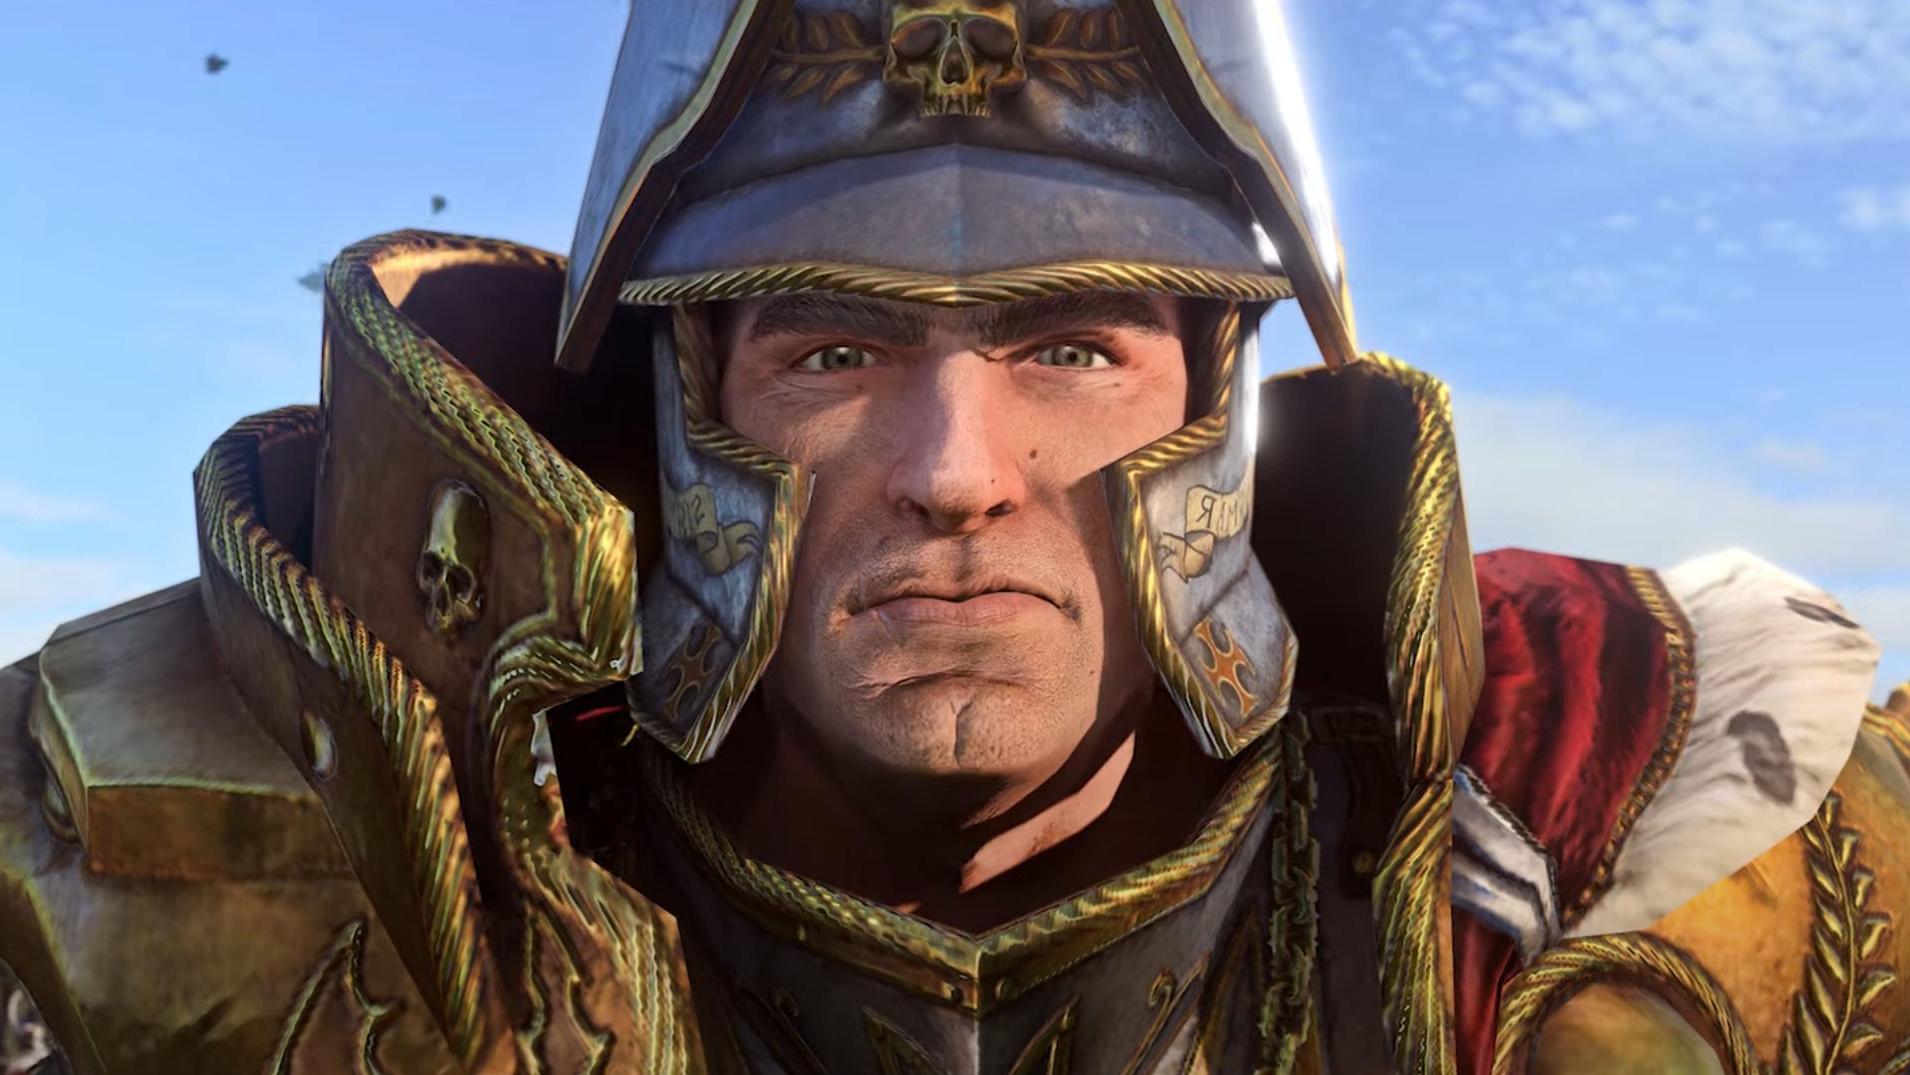 La "bêta" du mode Immortal Empires pour Total War: Warhammer III commence le 23 août